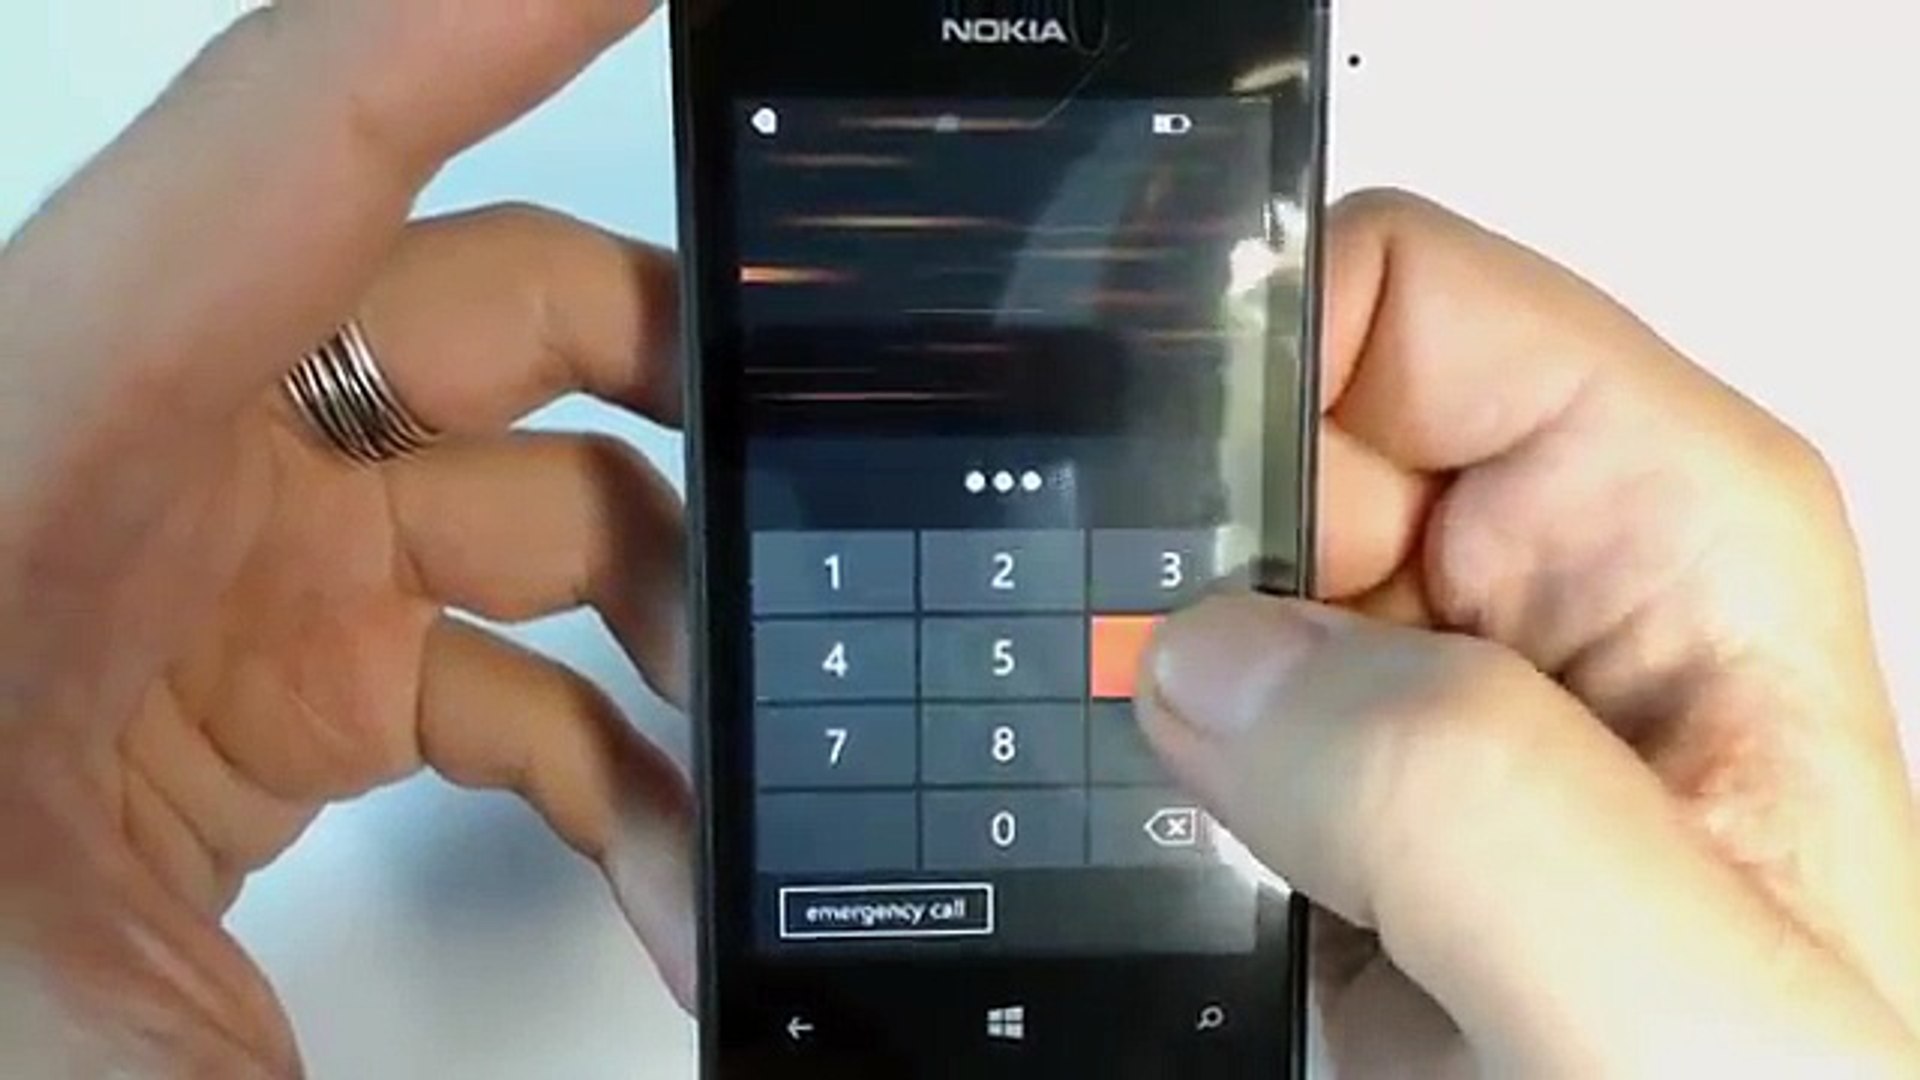 Sfondi Natalizi Nokia Lumia 520.Nokia Lumia 520 How To Remove Security Code By Hard Reset Video Dailymotion